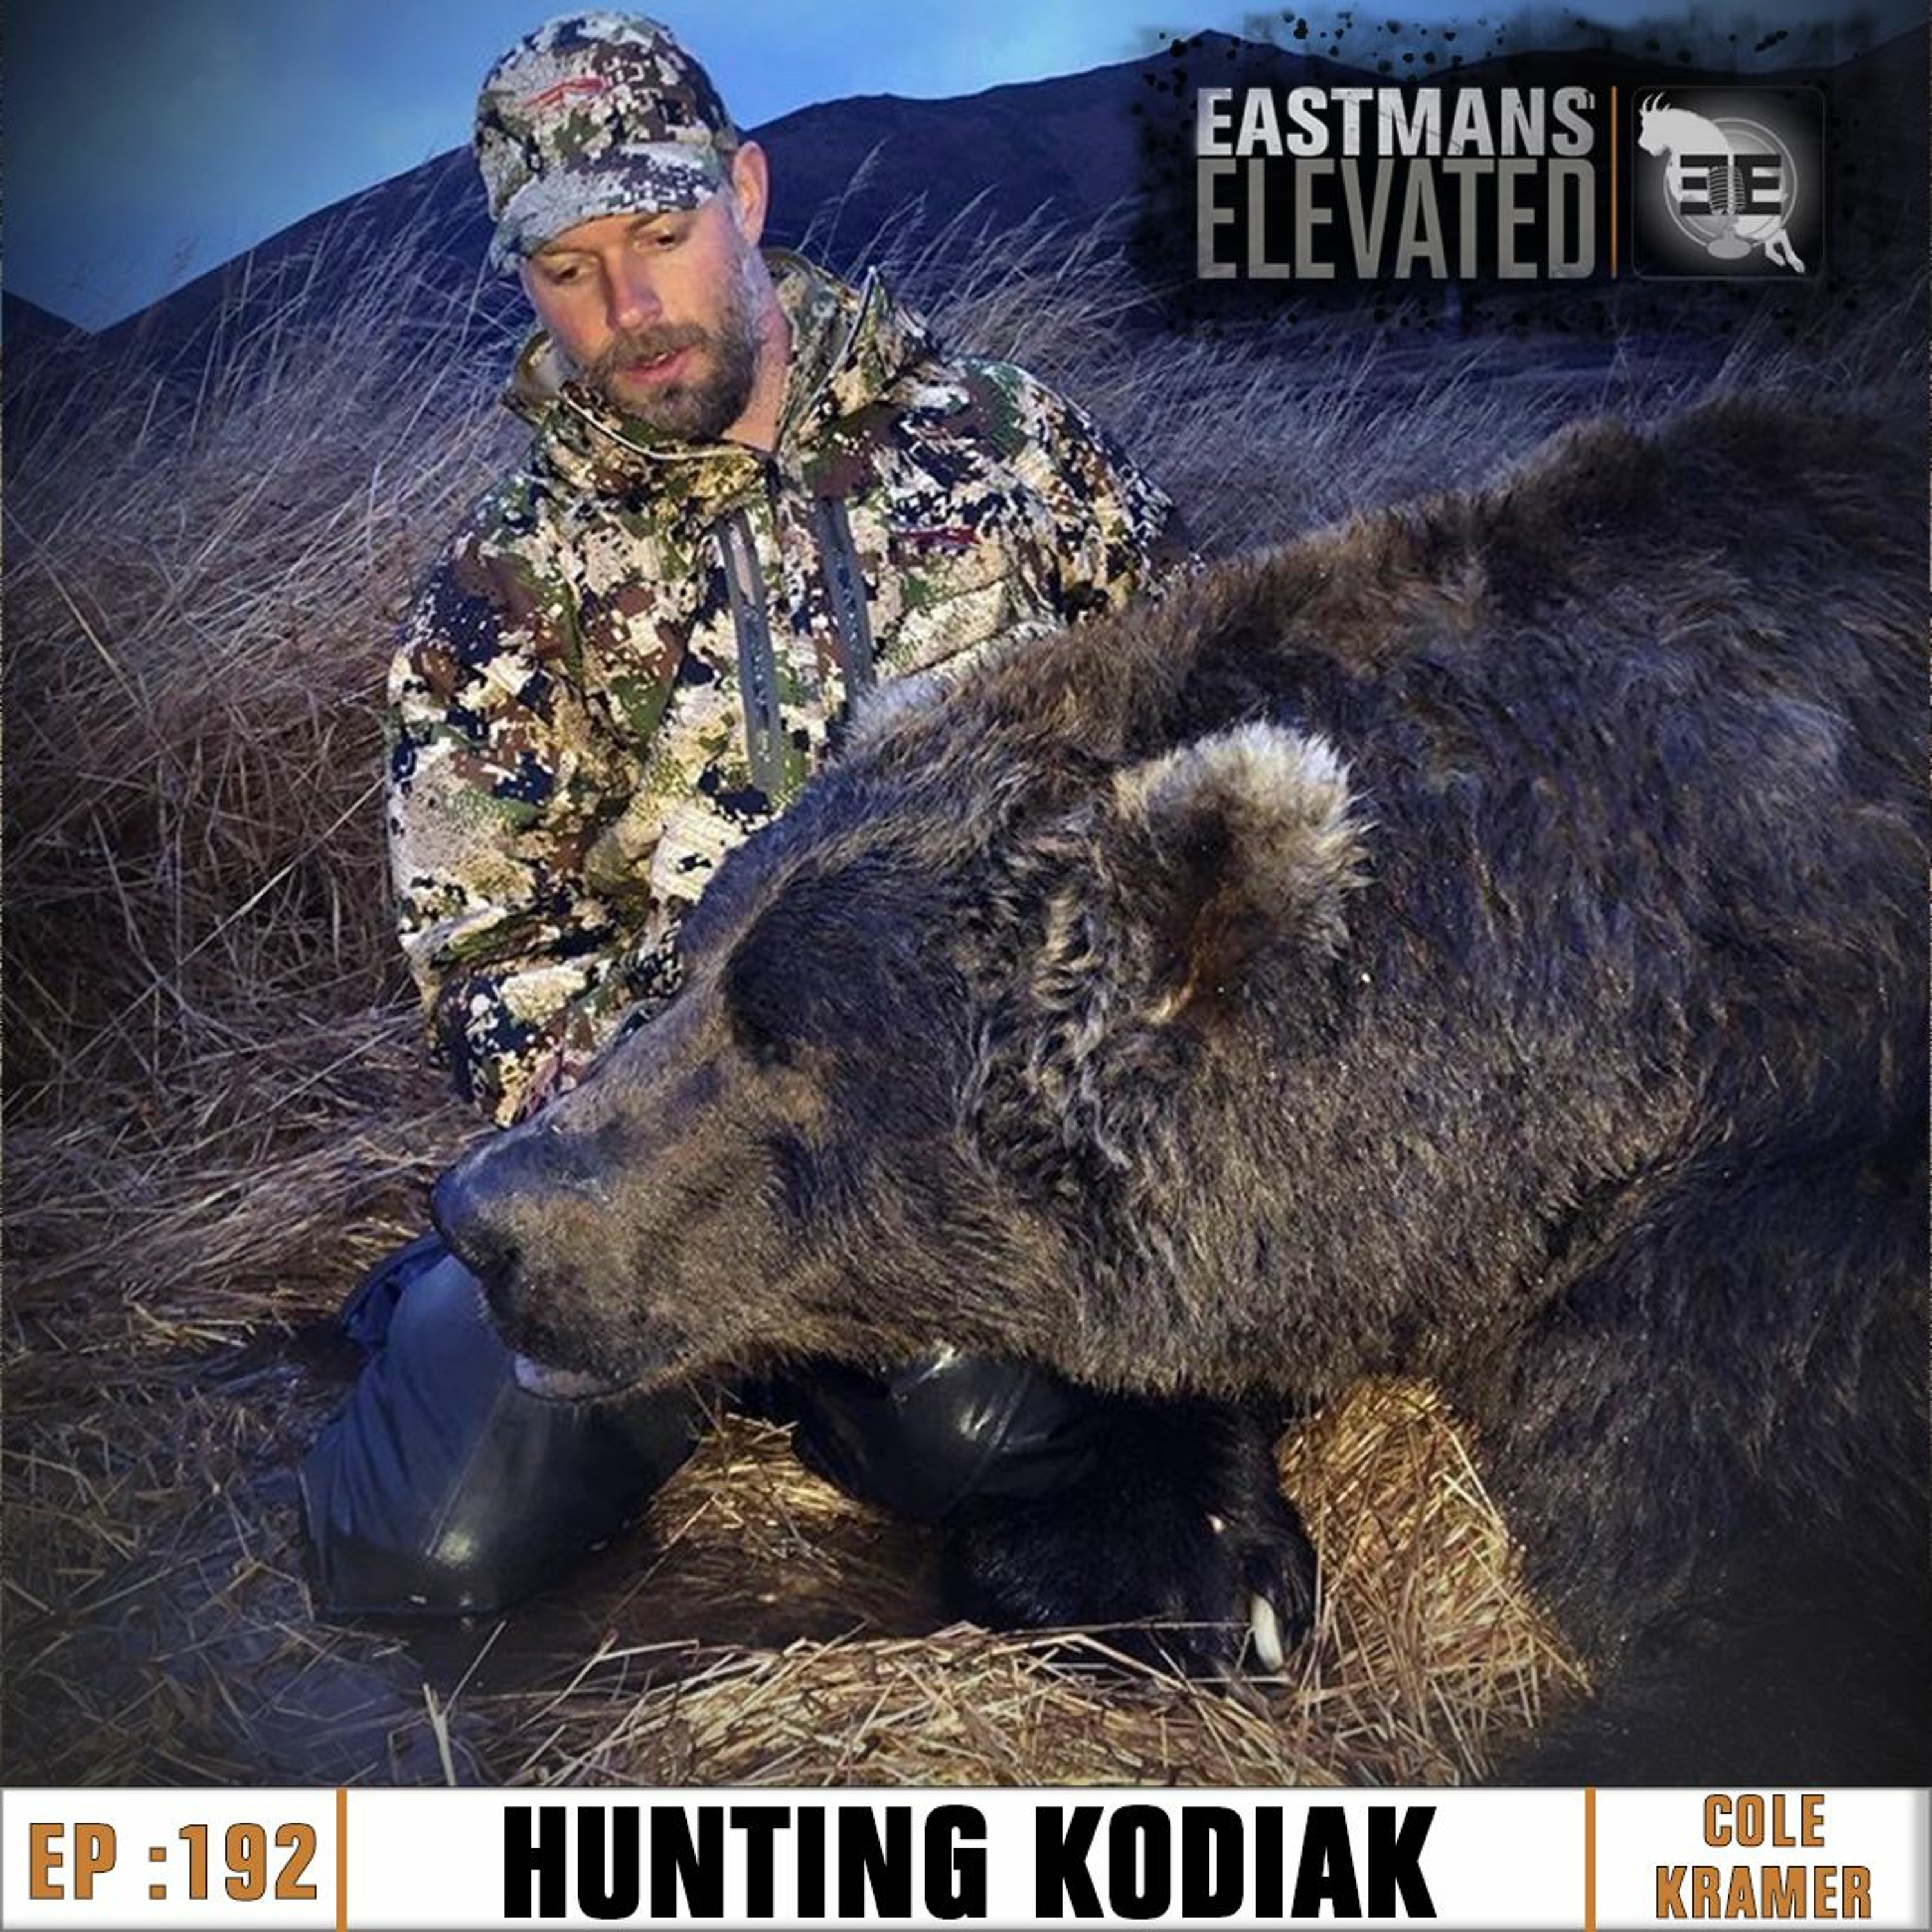 Episode 192: Hunting Kodiak with Cole Kramer